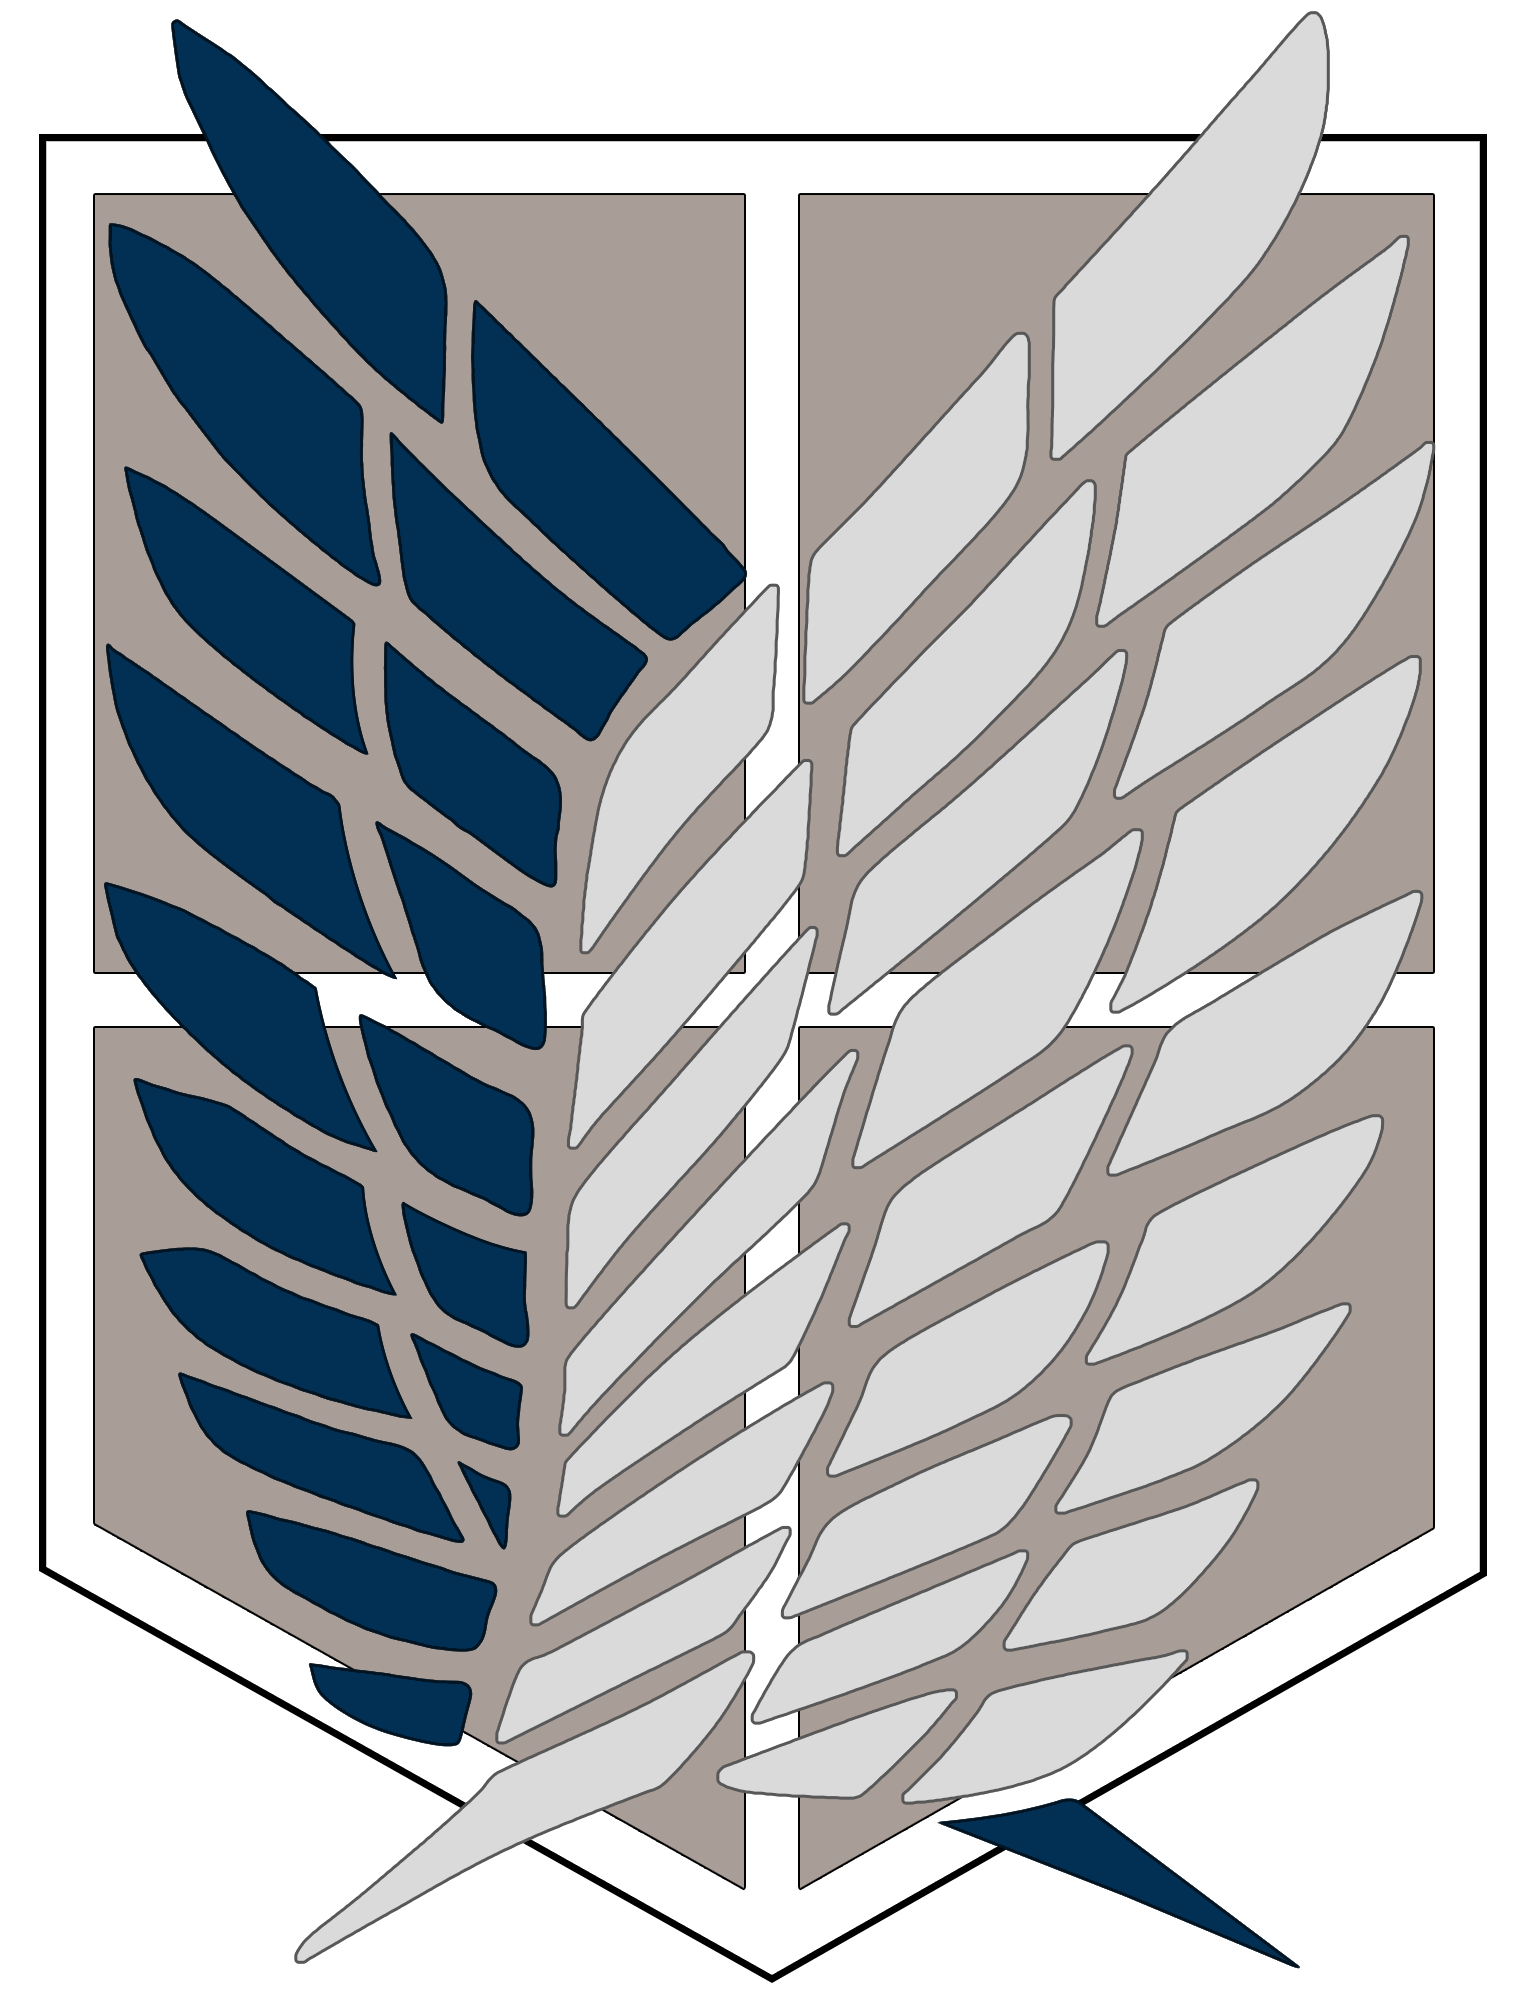 Aot survey corps logo